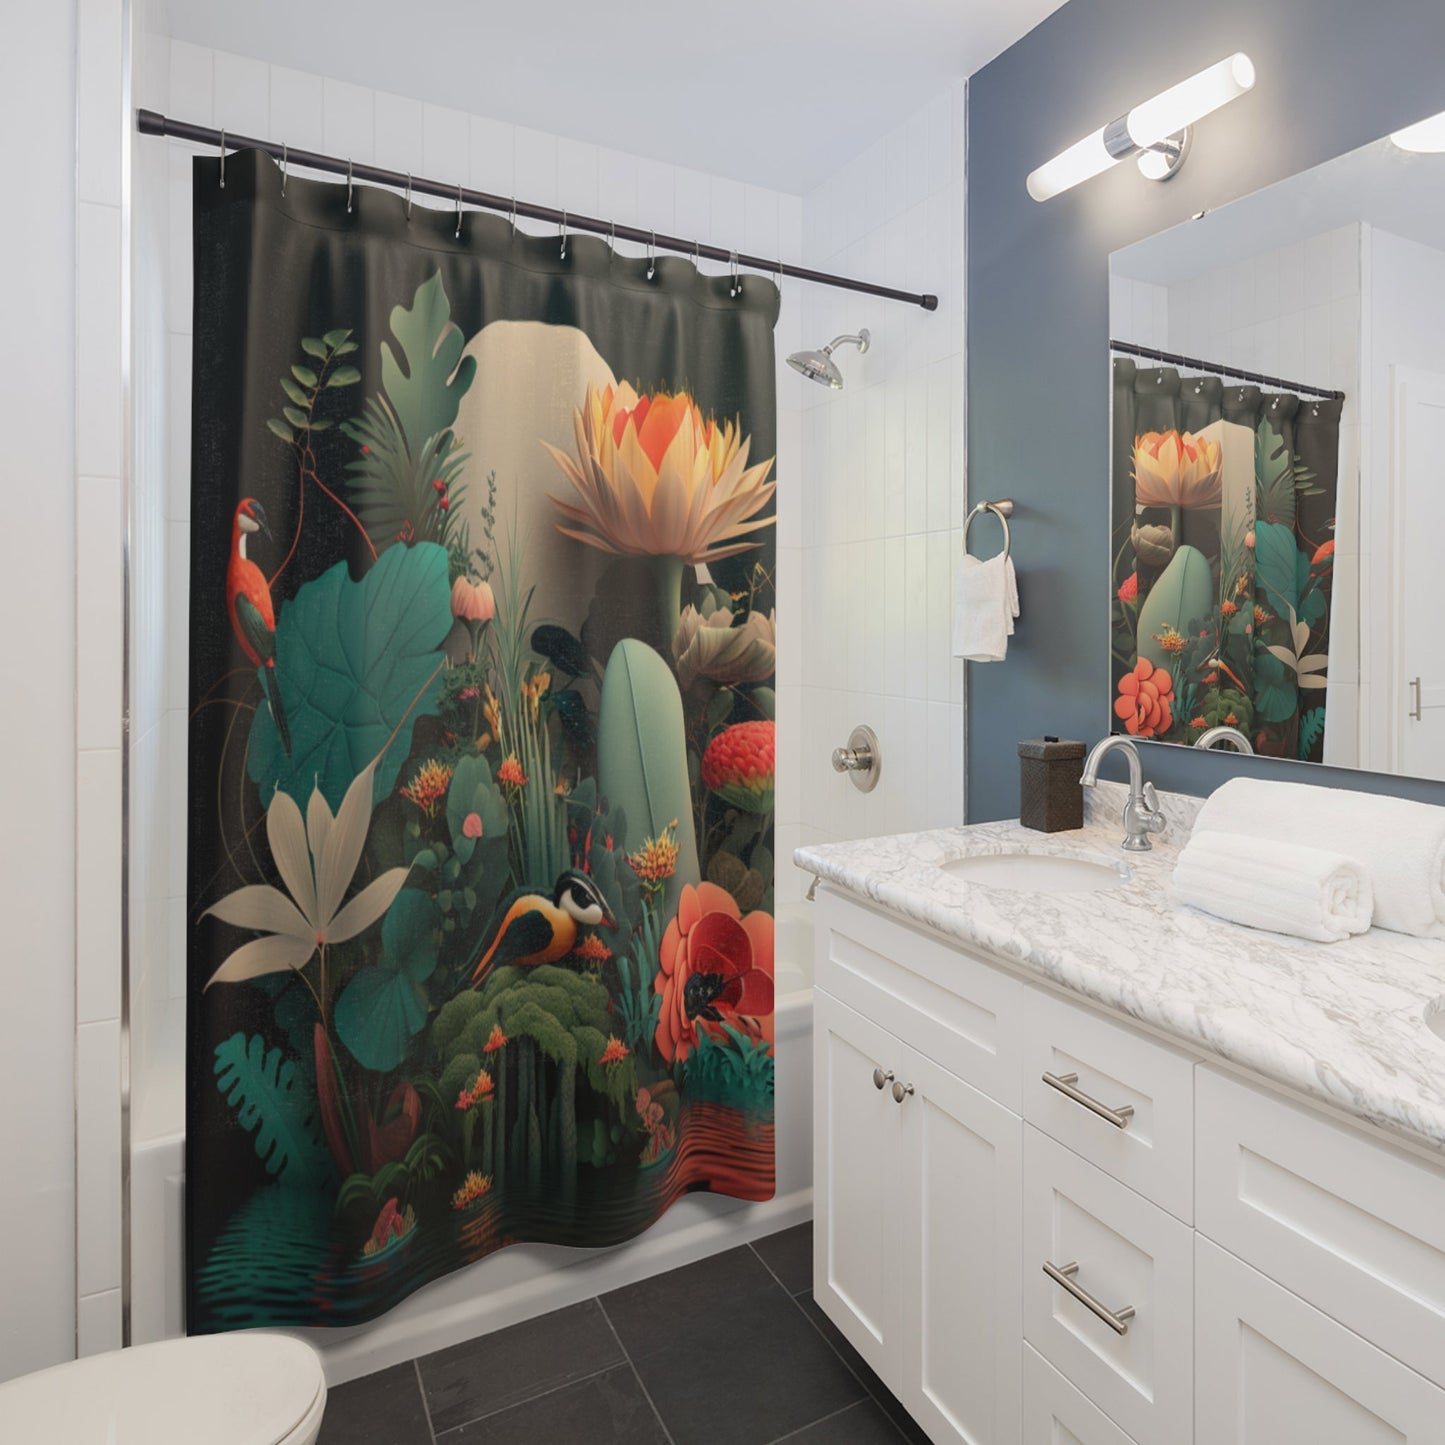 Home Decor - Tropical Shower Curtains